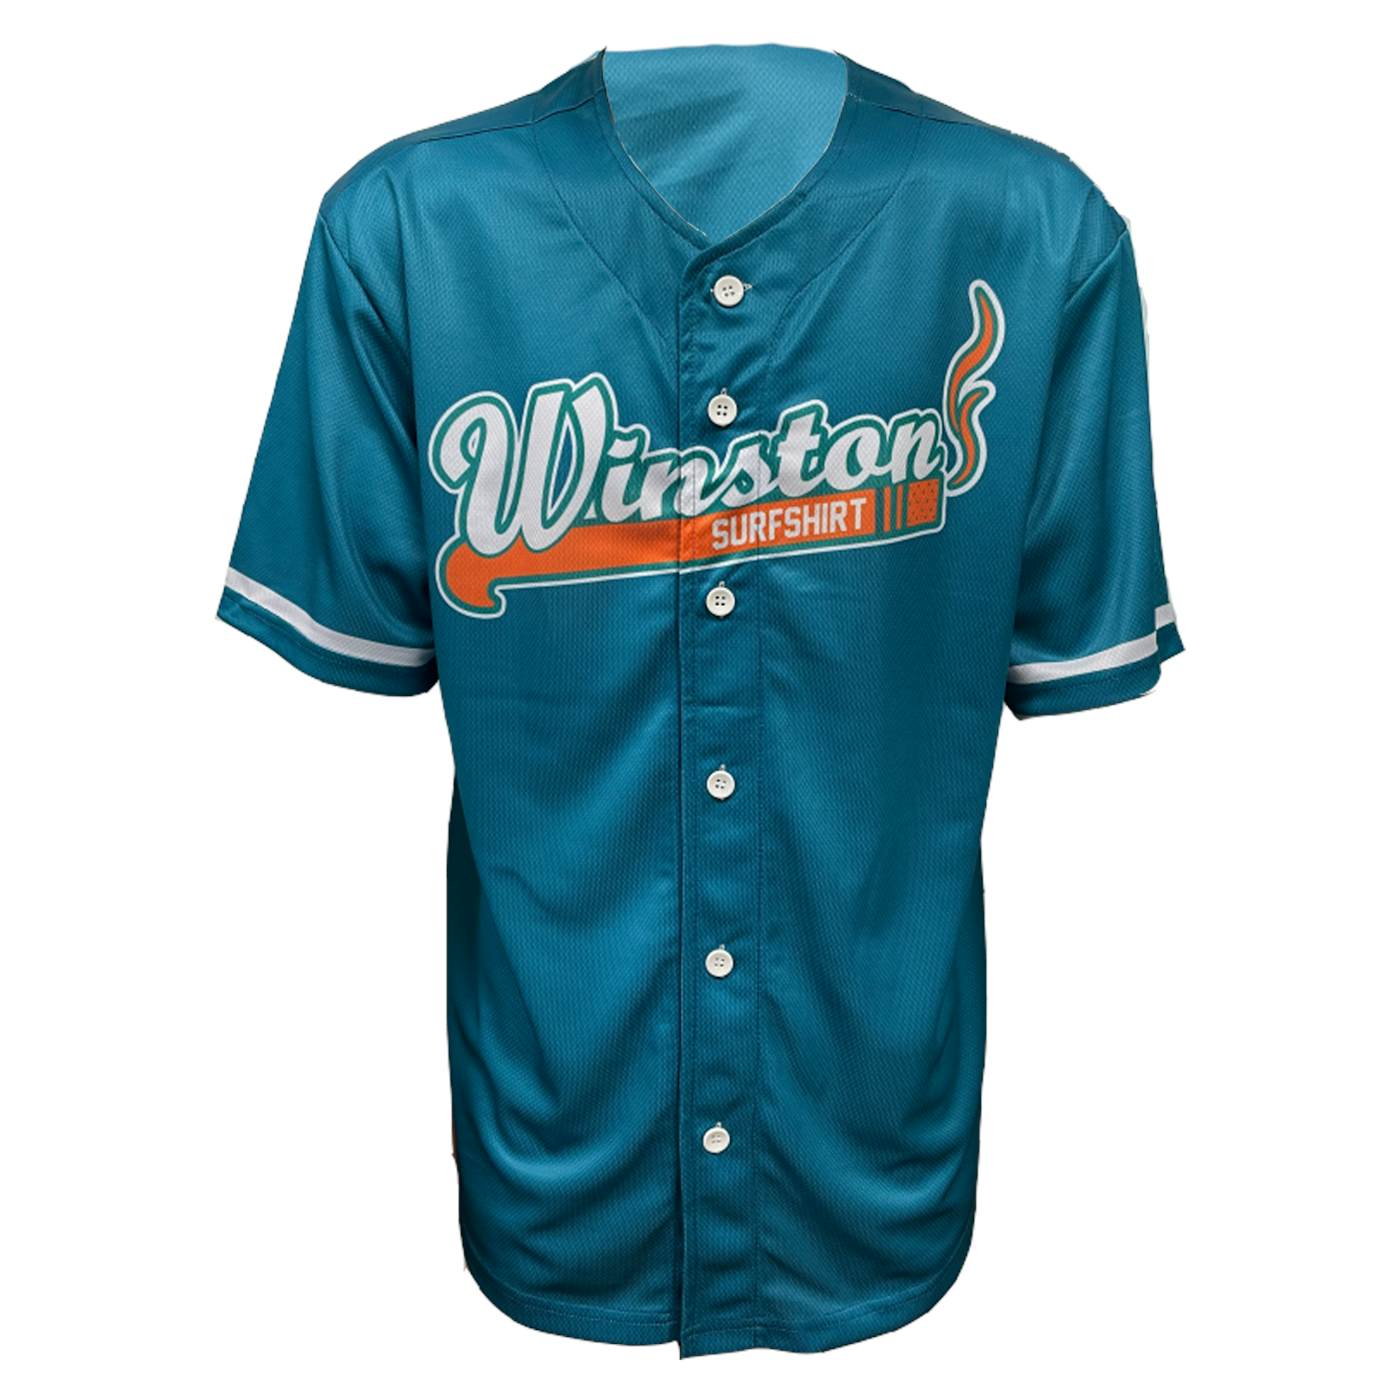 Winston Surfshirt | Baseball Jersey